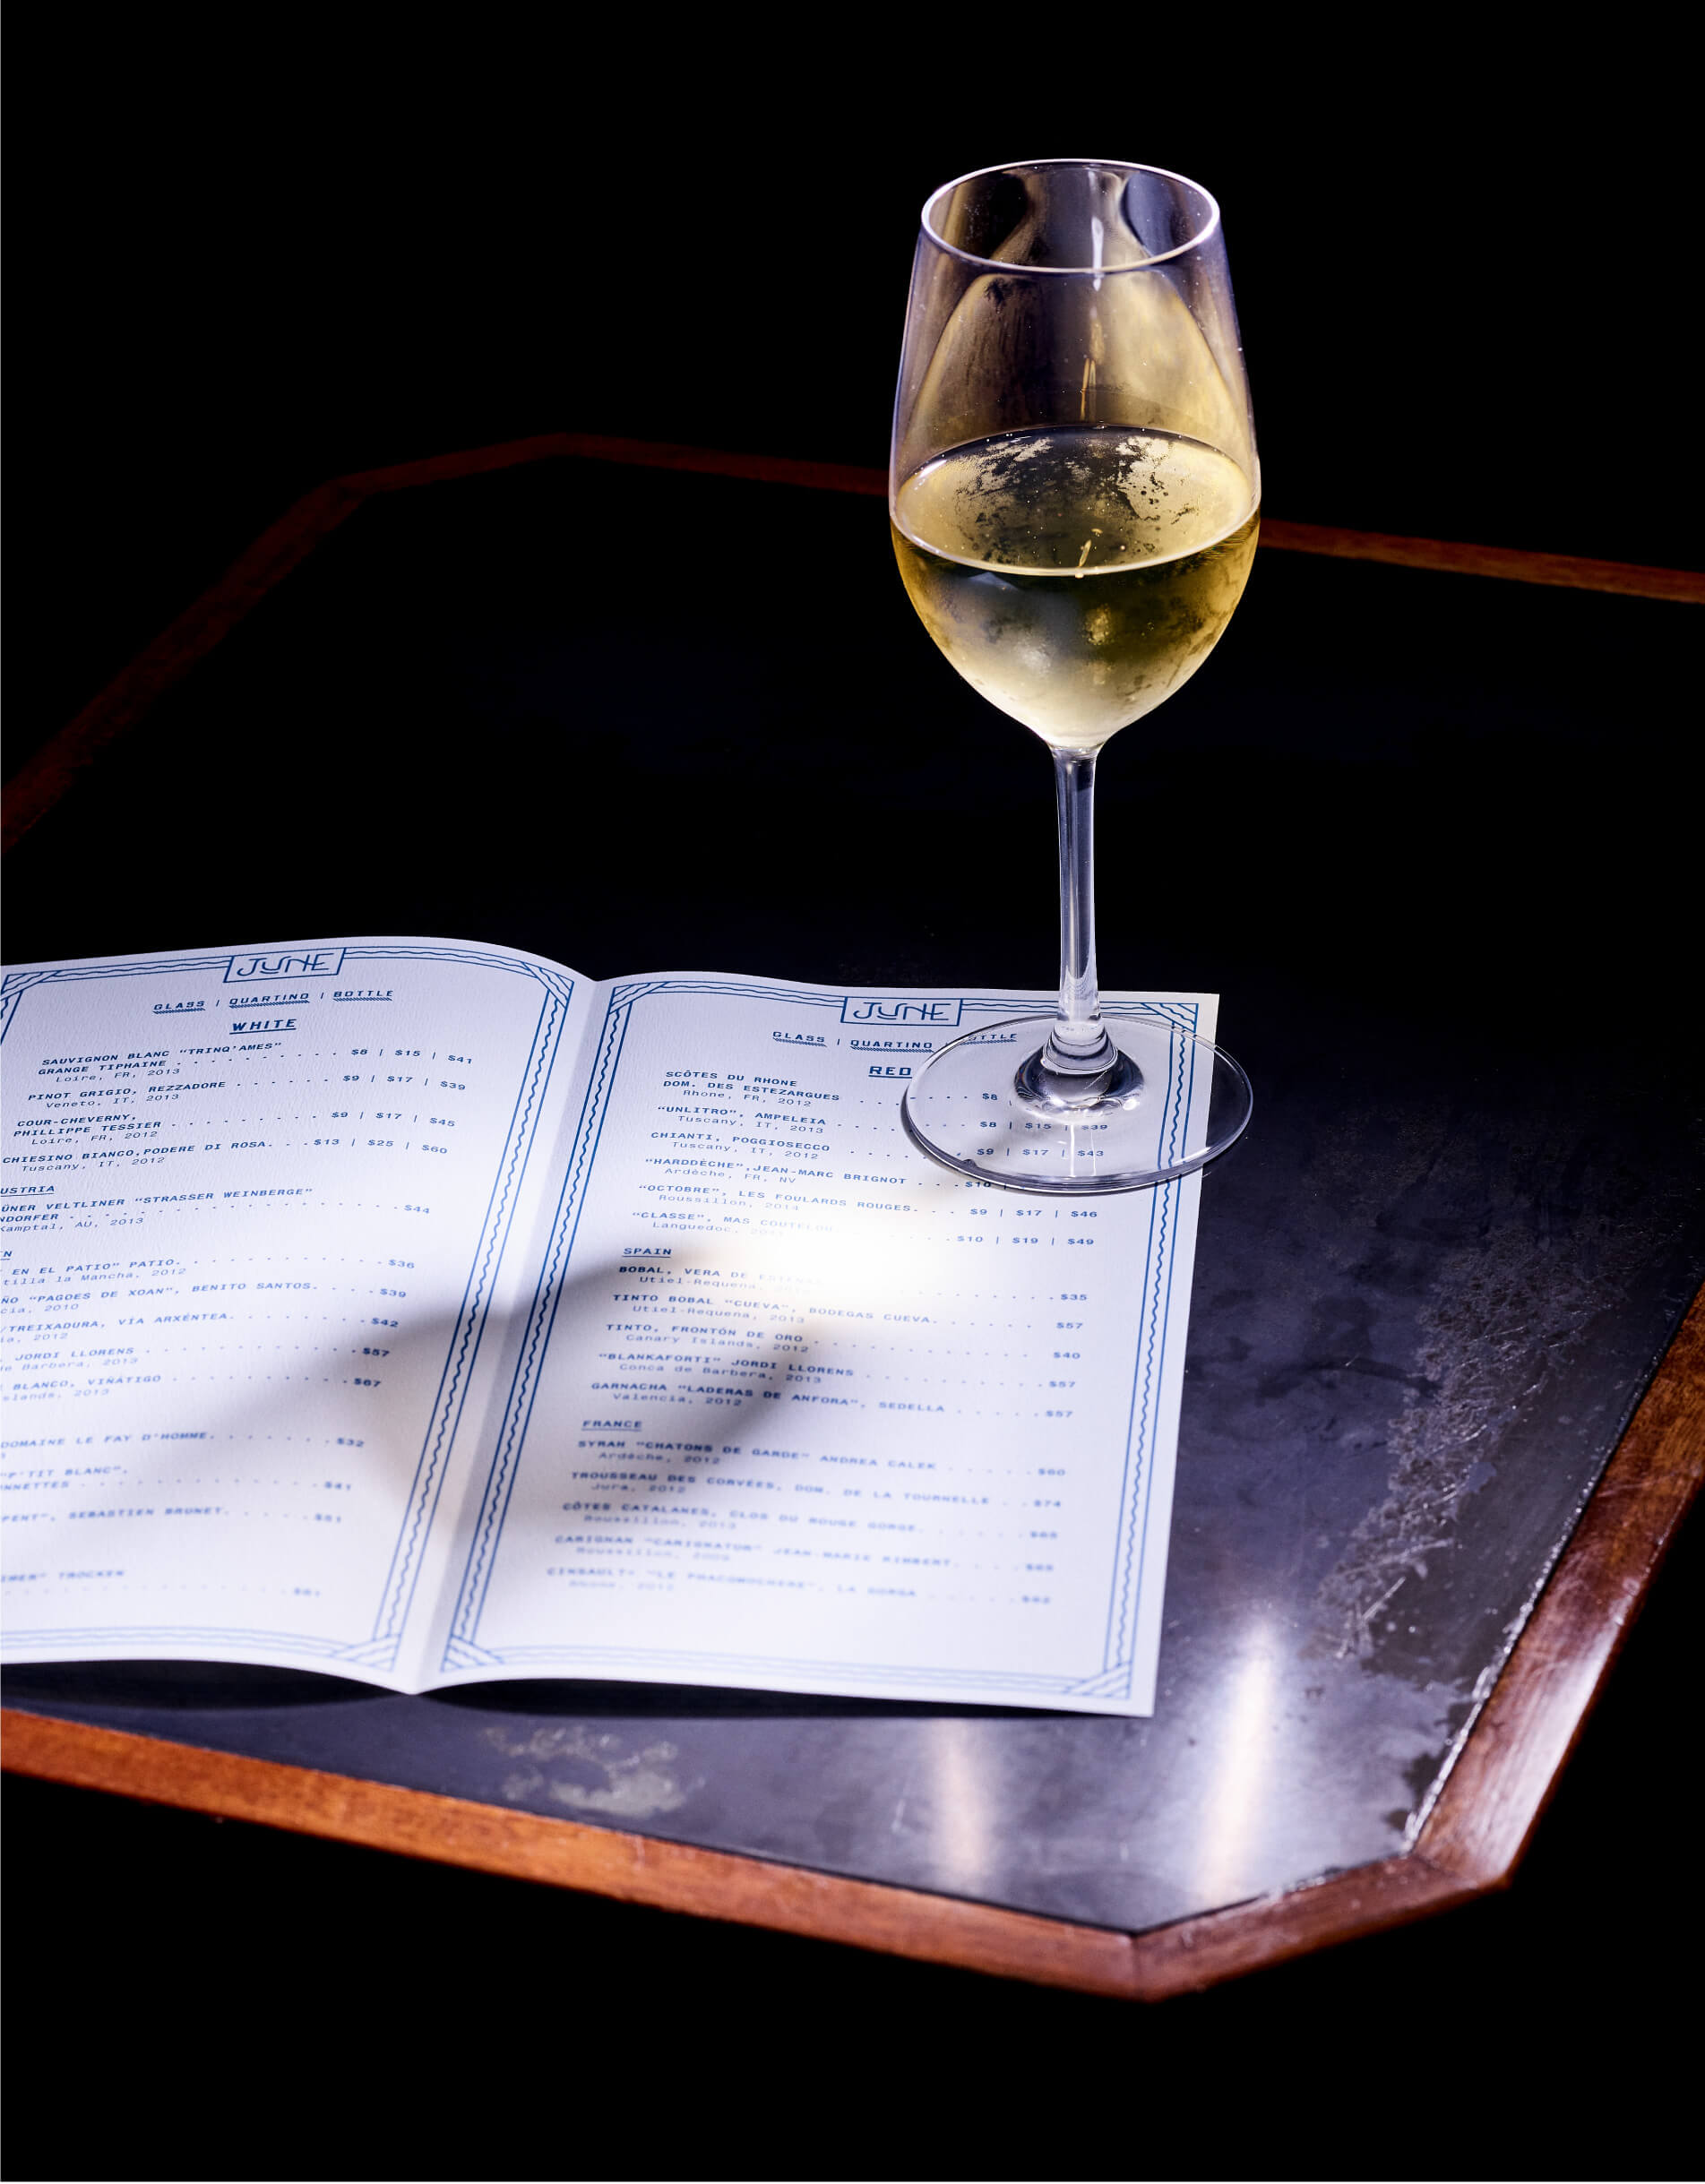 gander-june-wine-glass-menu@2x